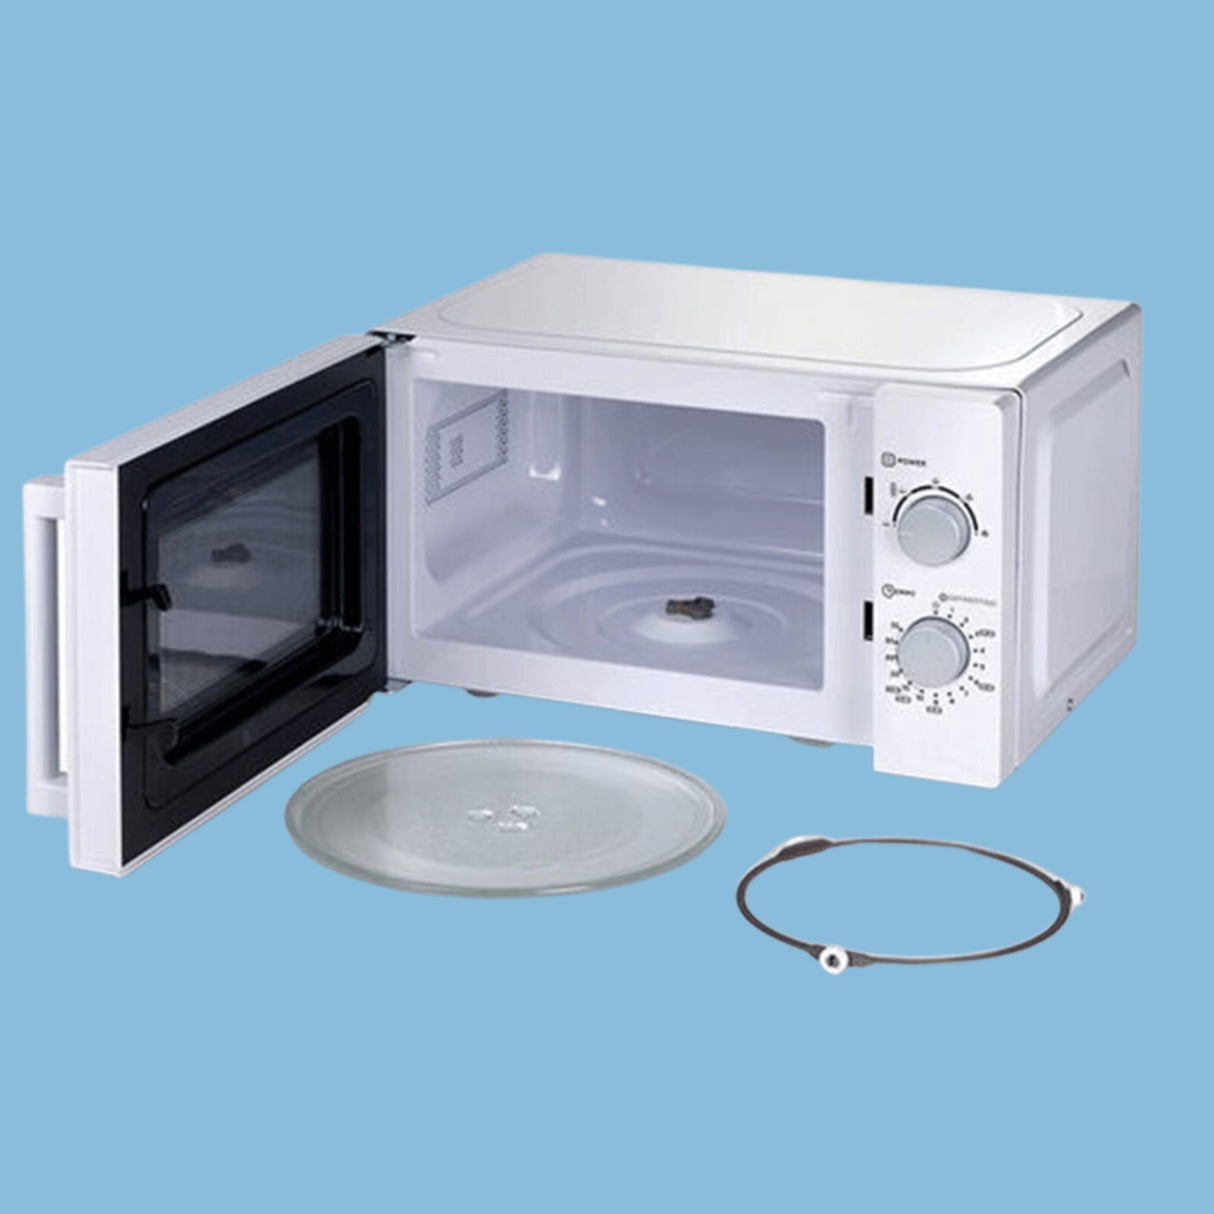 Kenwood 20L 700W Microwave Oven MWM20 – White - KWT Tech Mart